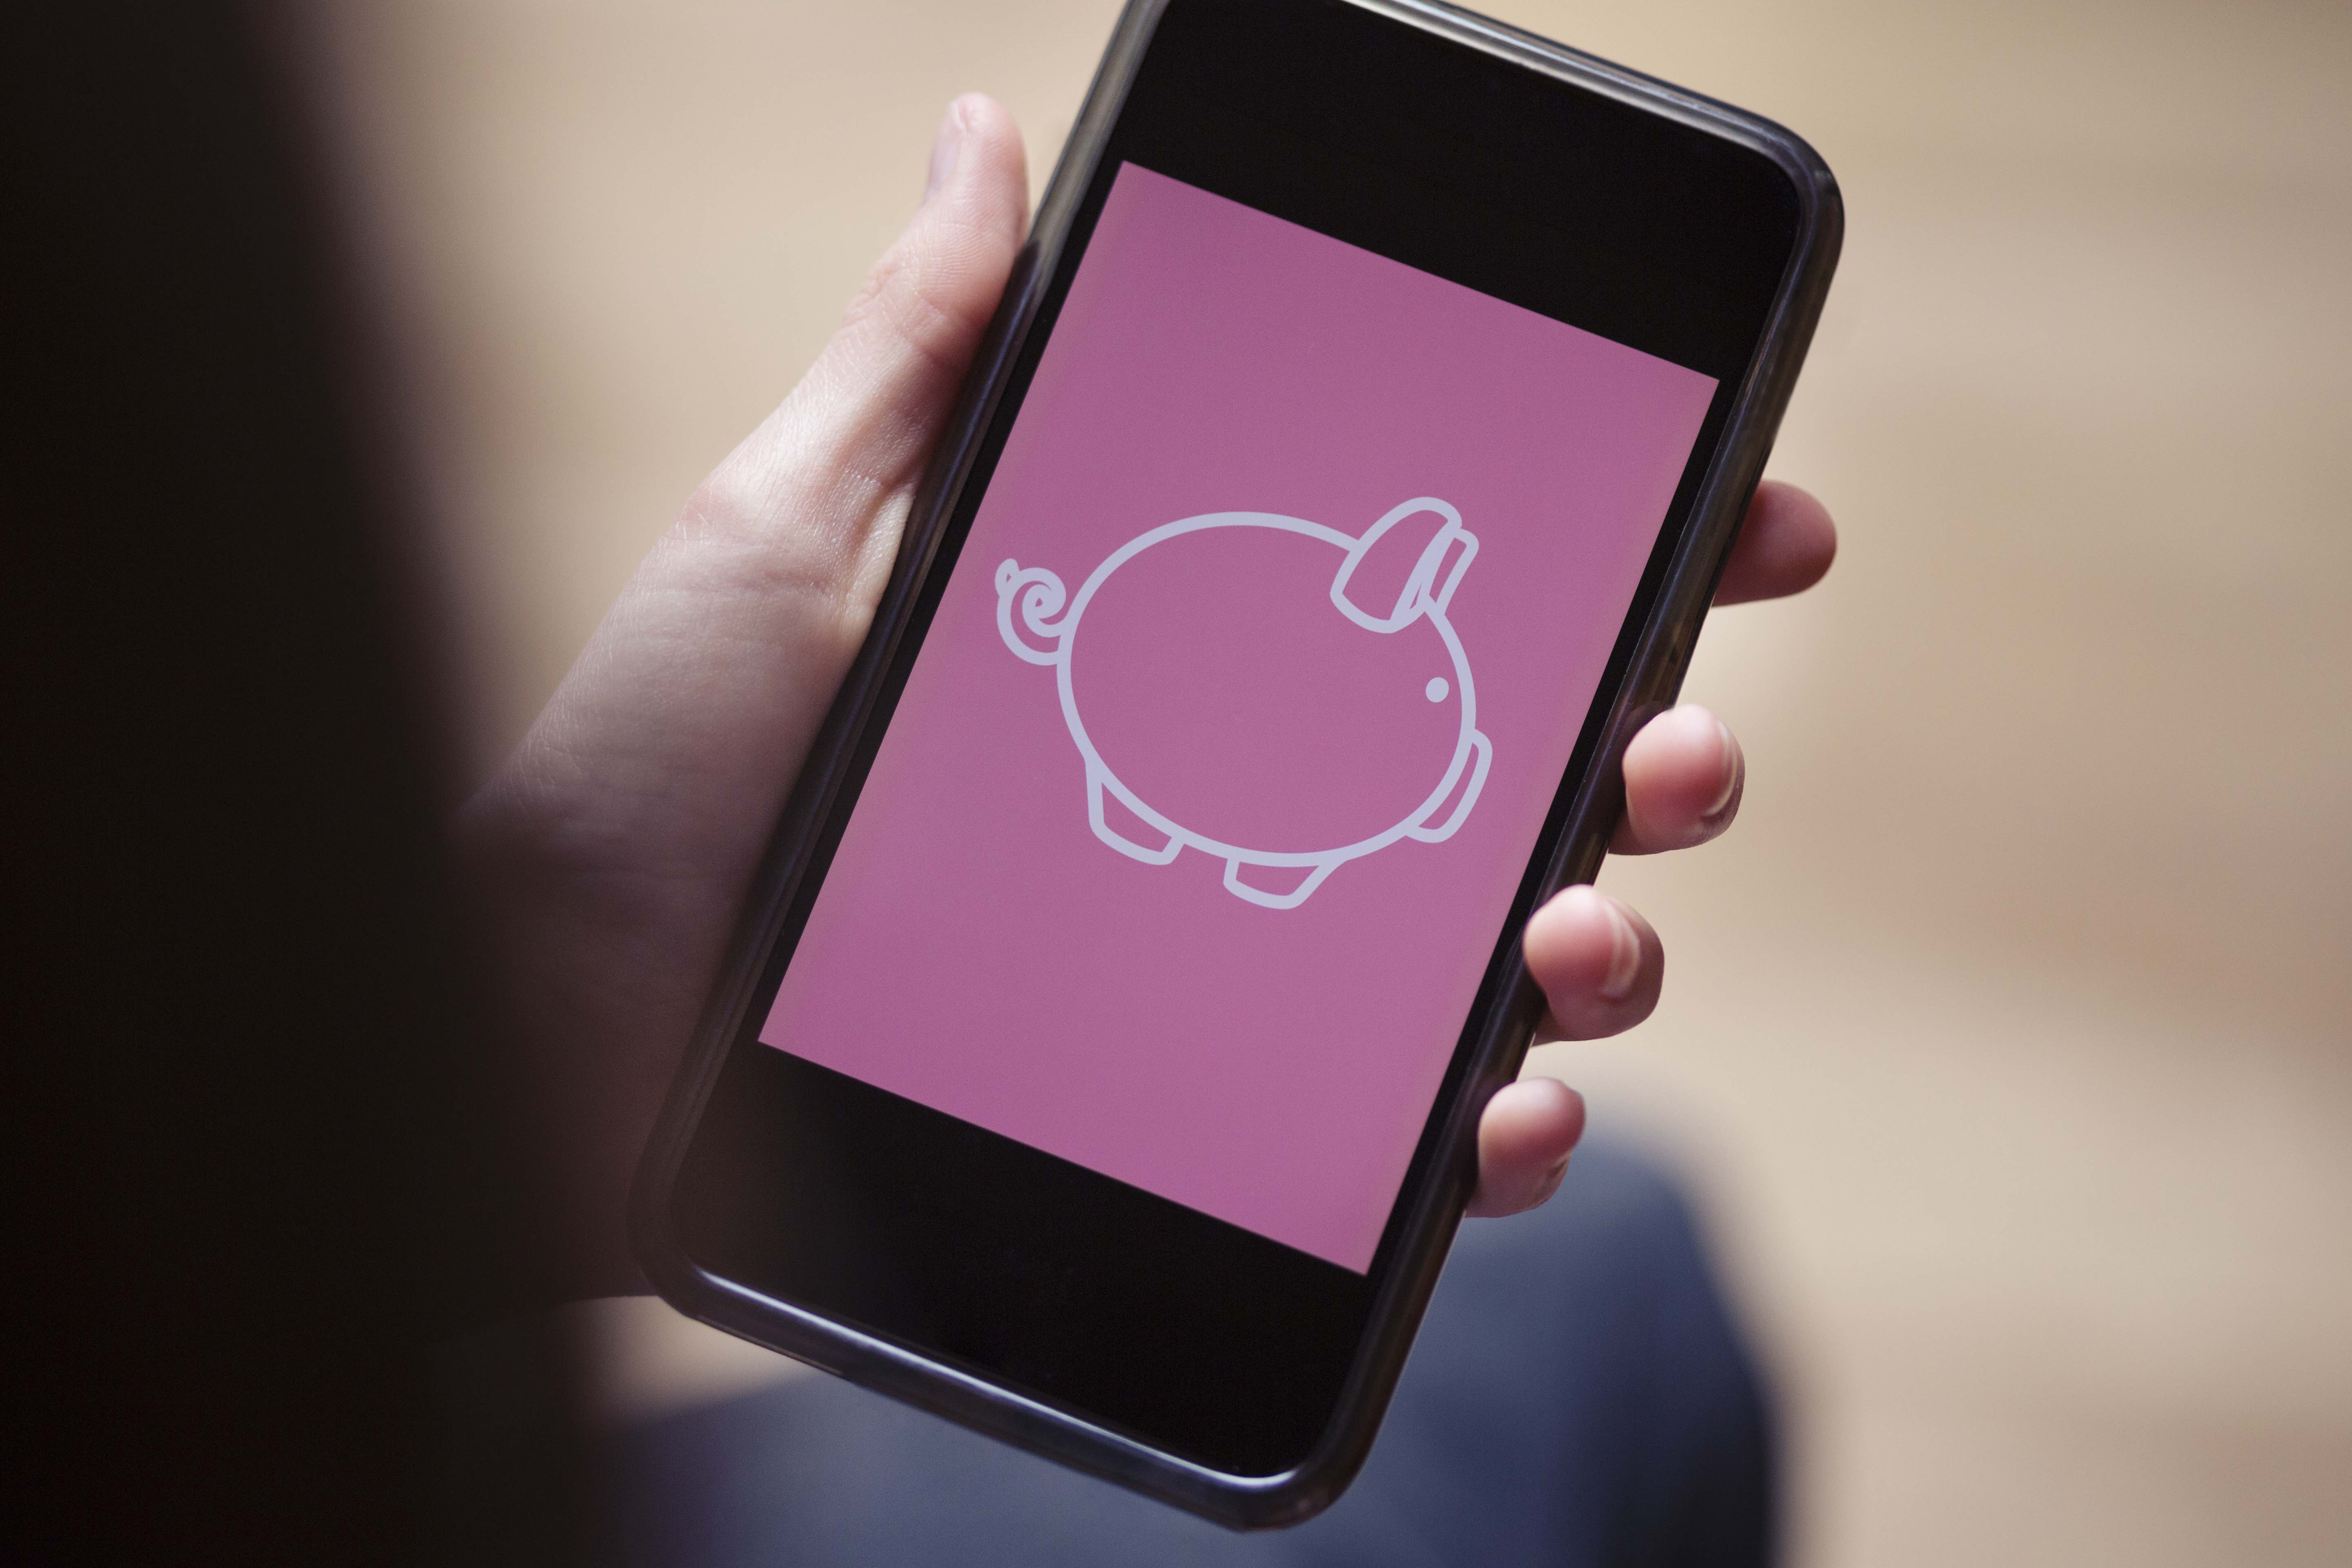 A savings app on a smartphone